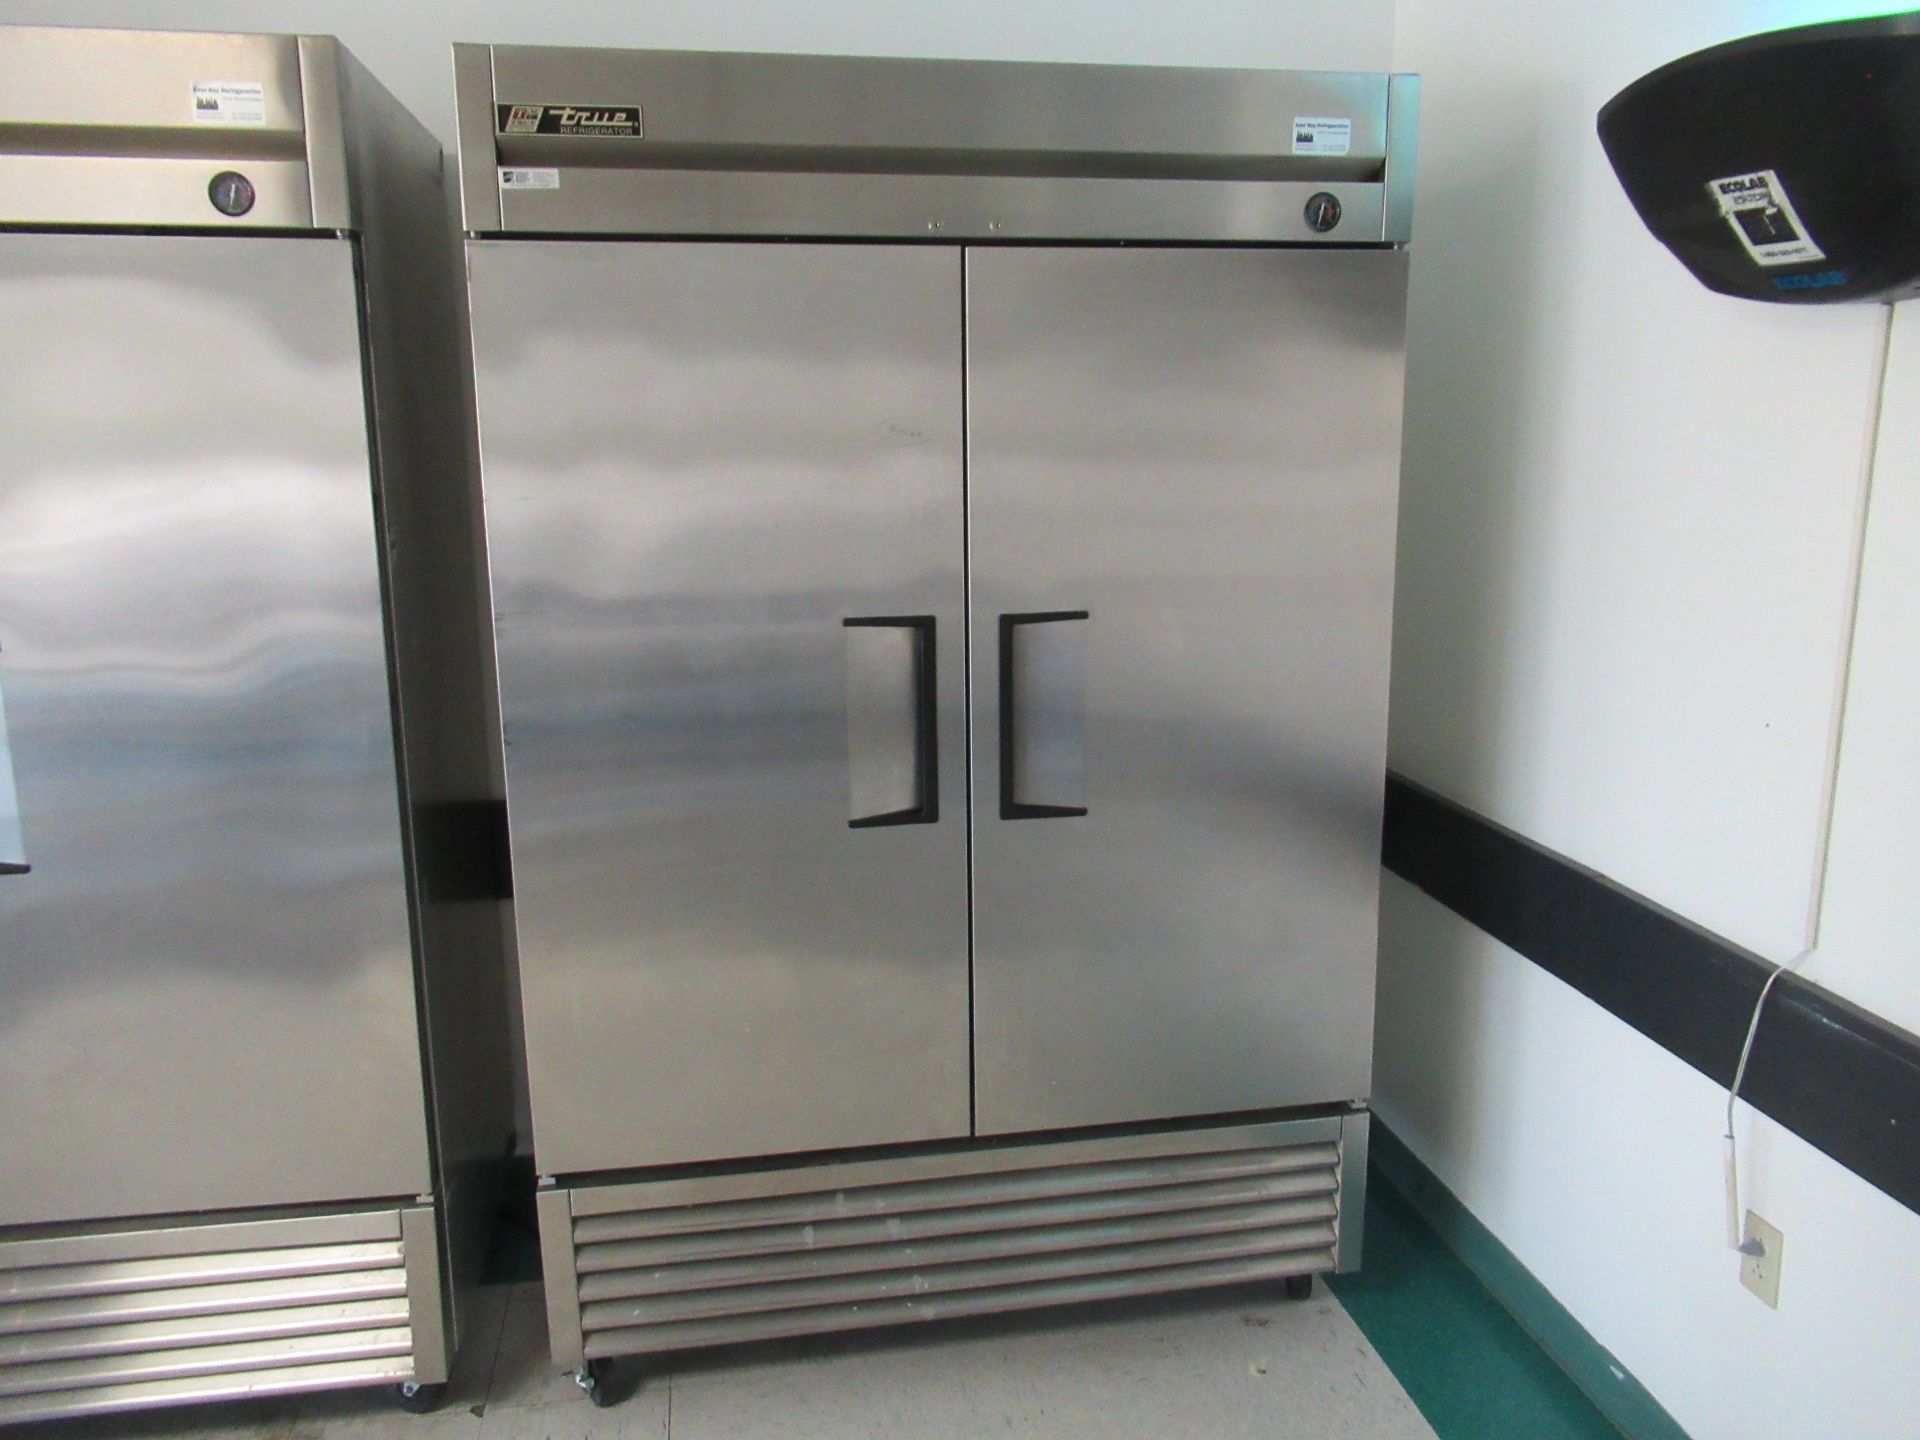 TRUE 2-Door Reach In Refrigerator, Model T-49, Located In: Office Break Rm - Rigging Fee: $ 250